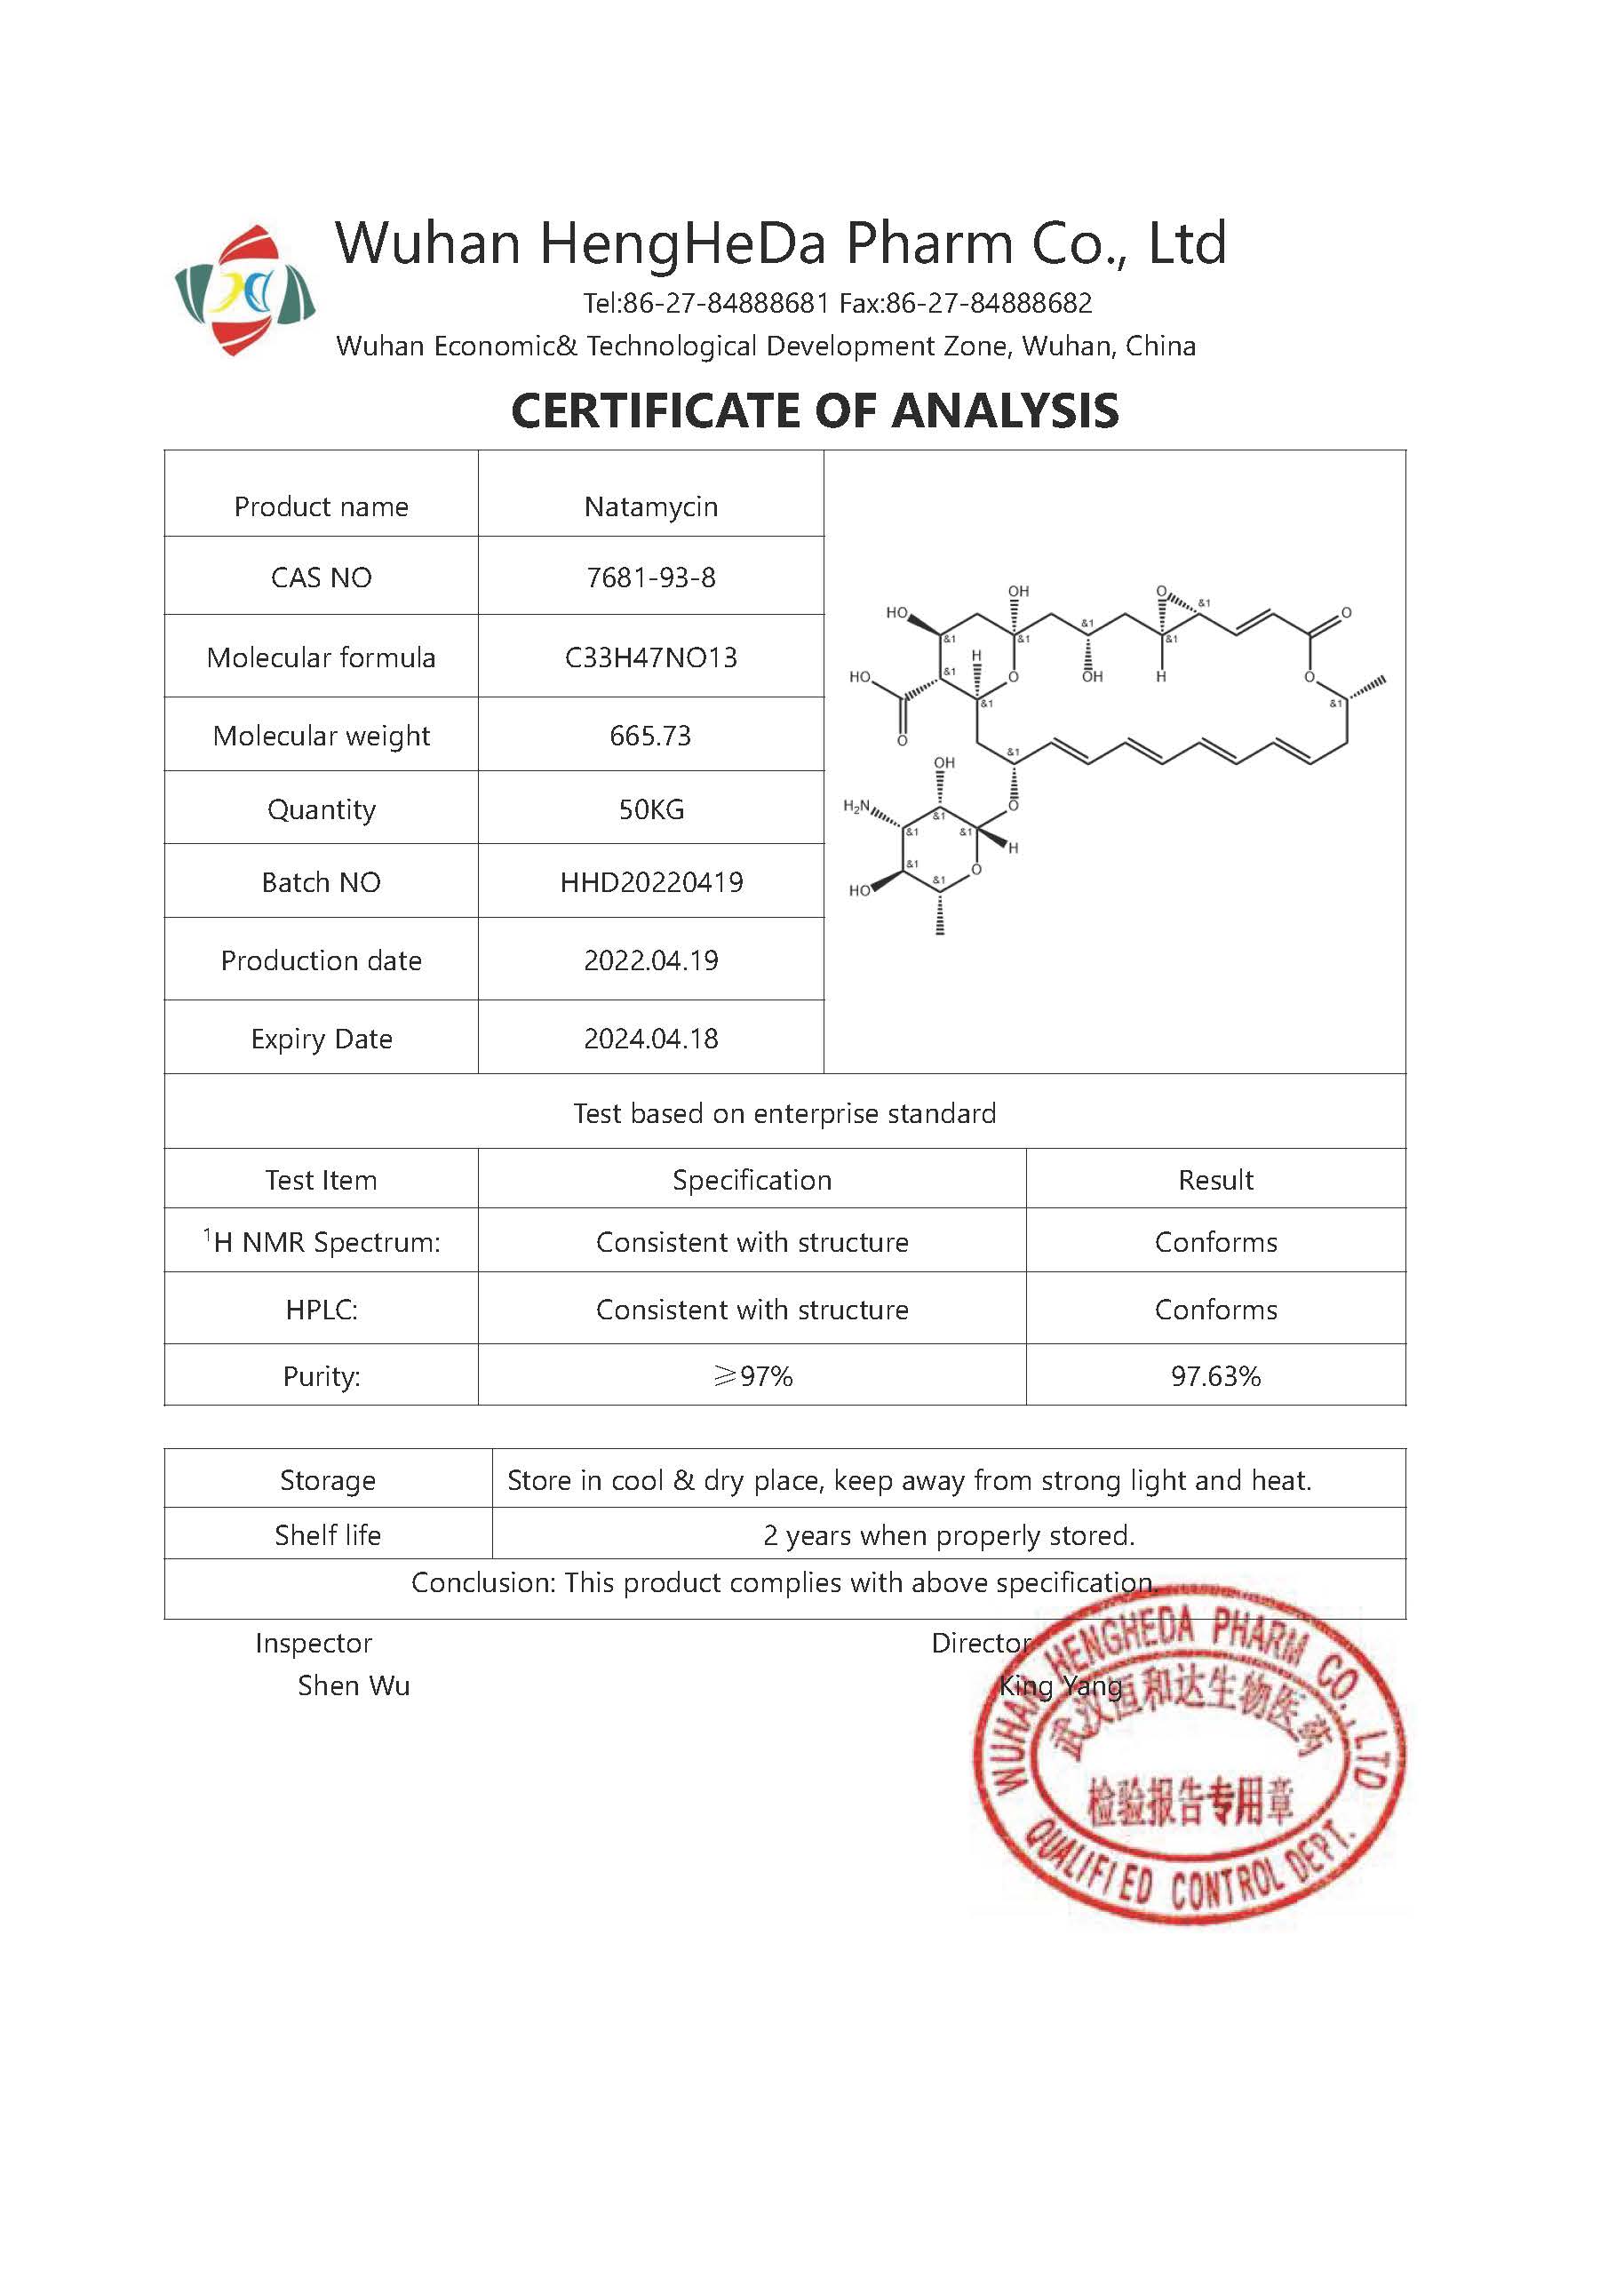 Acquista Fornitura di fabbrica Natamicina CAS 7681-93-8 di alta qualità,Fornitura di fabbrica Natamicina CAS 7681-93-8 di alta qualità prezzi,Fornitura di fabbrica Natamicina CAS 7681-93-8 di alta qualità marche,Fornitura di fabbrica Natamicina CAS 7681-93-8 di alta qualità Produttori,Fornitura di fabbrica Natamicina CAS 7681-93-8 di alta qualità Citazioni,Fornitura di fabbrica Natamicina CAS 7681-93-8 di alta qualità  l'azienda,